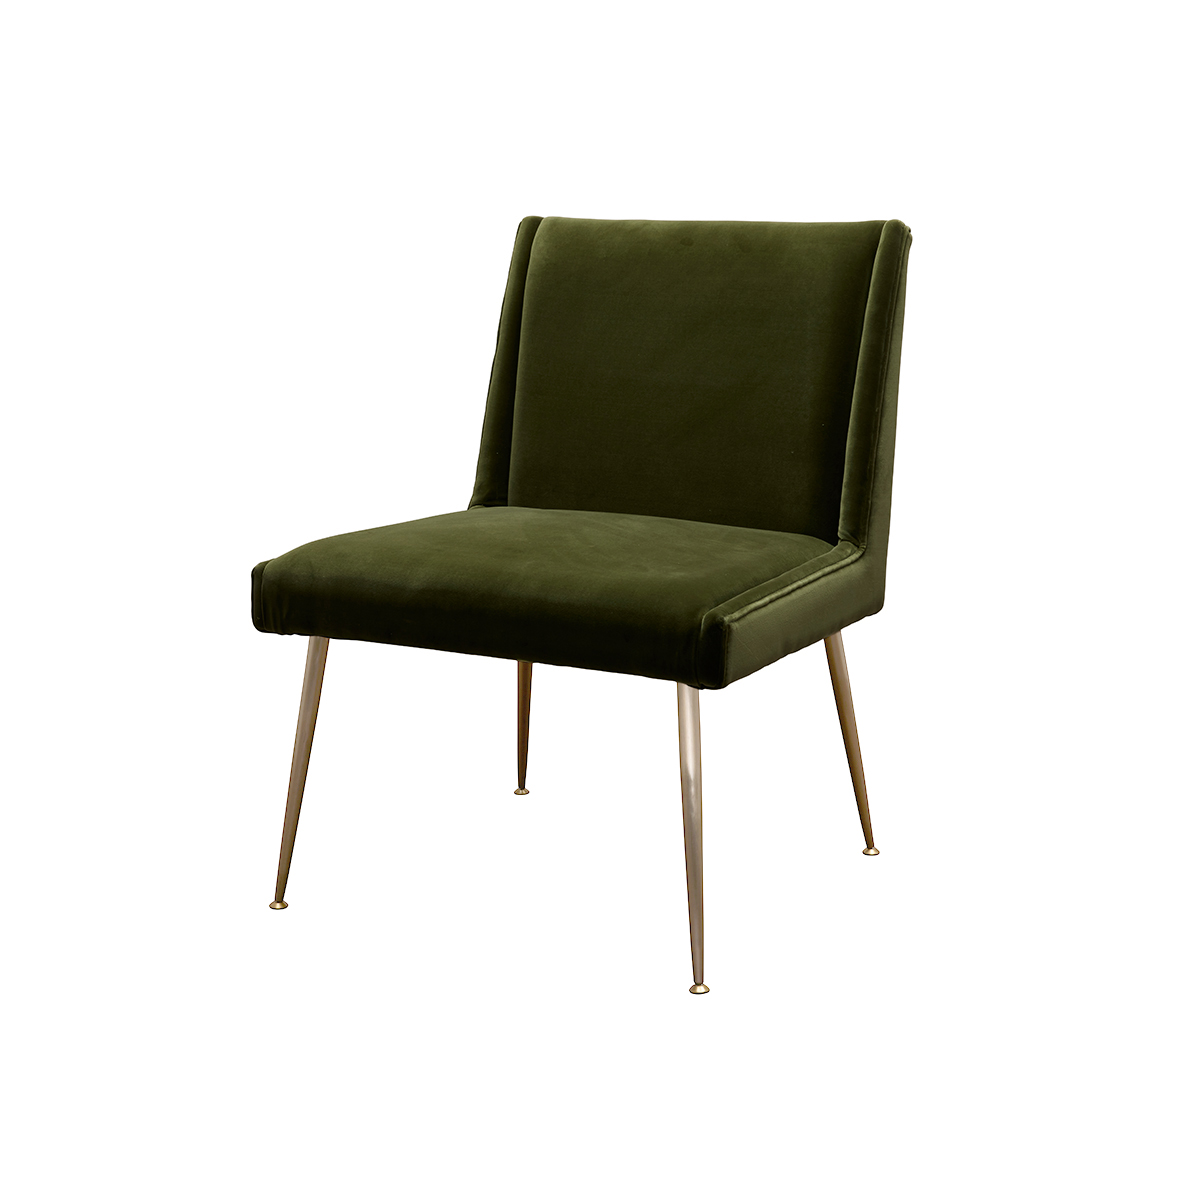 Art Lounge Chair – Amazon Green